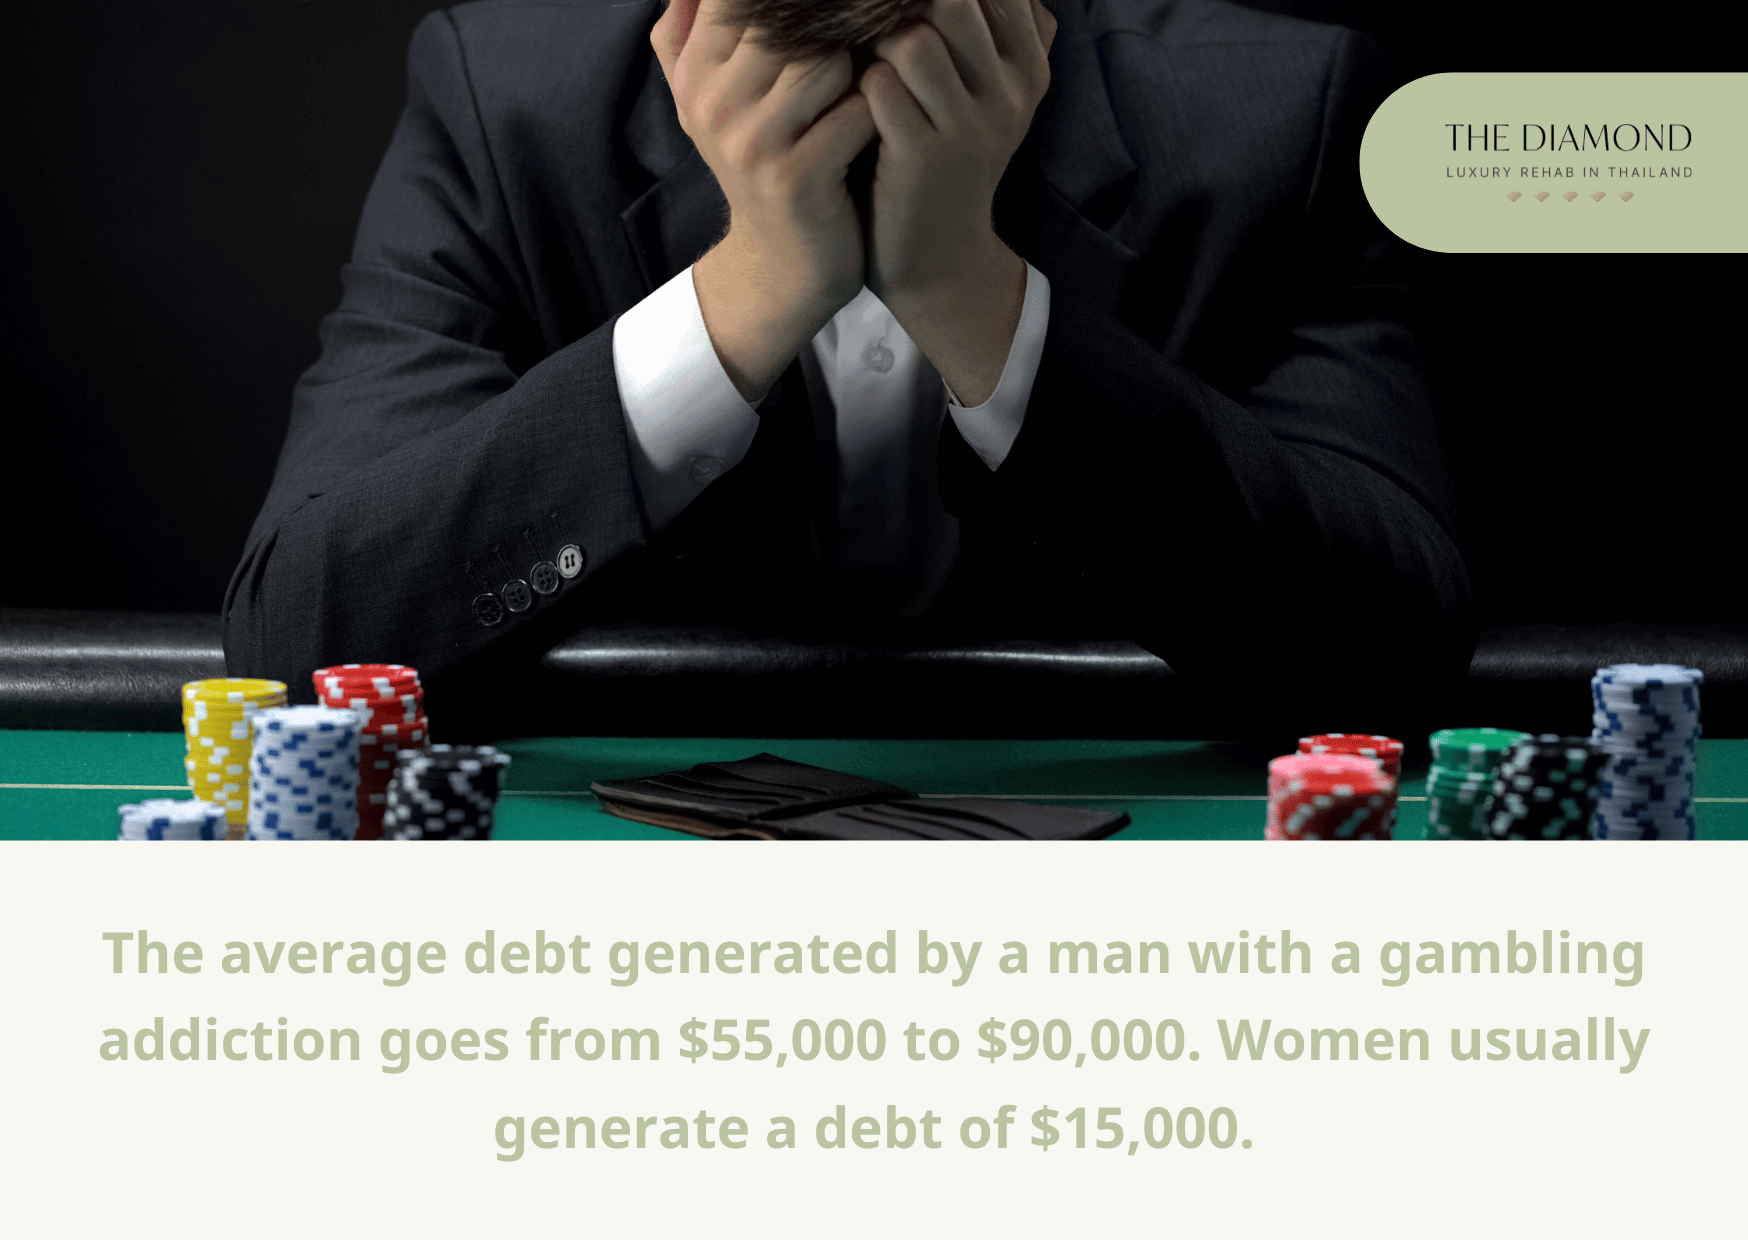 debt due to gambling addiction